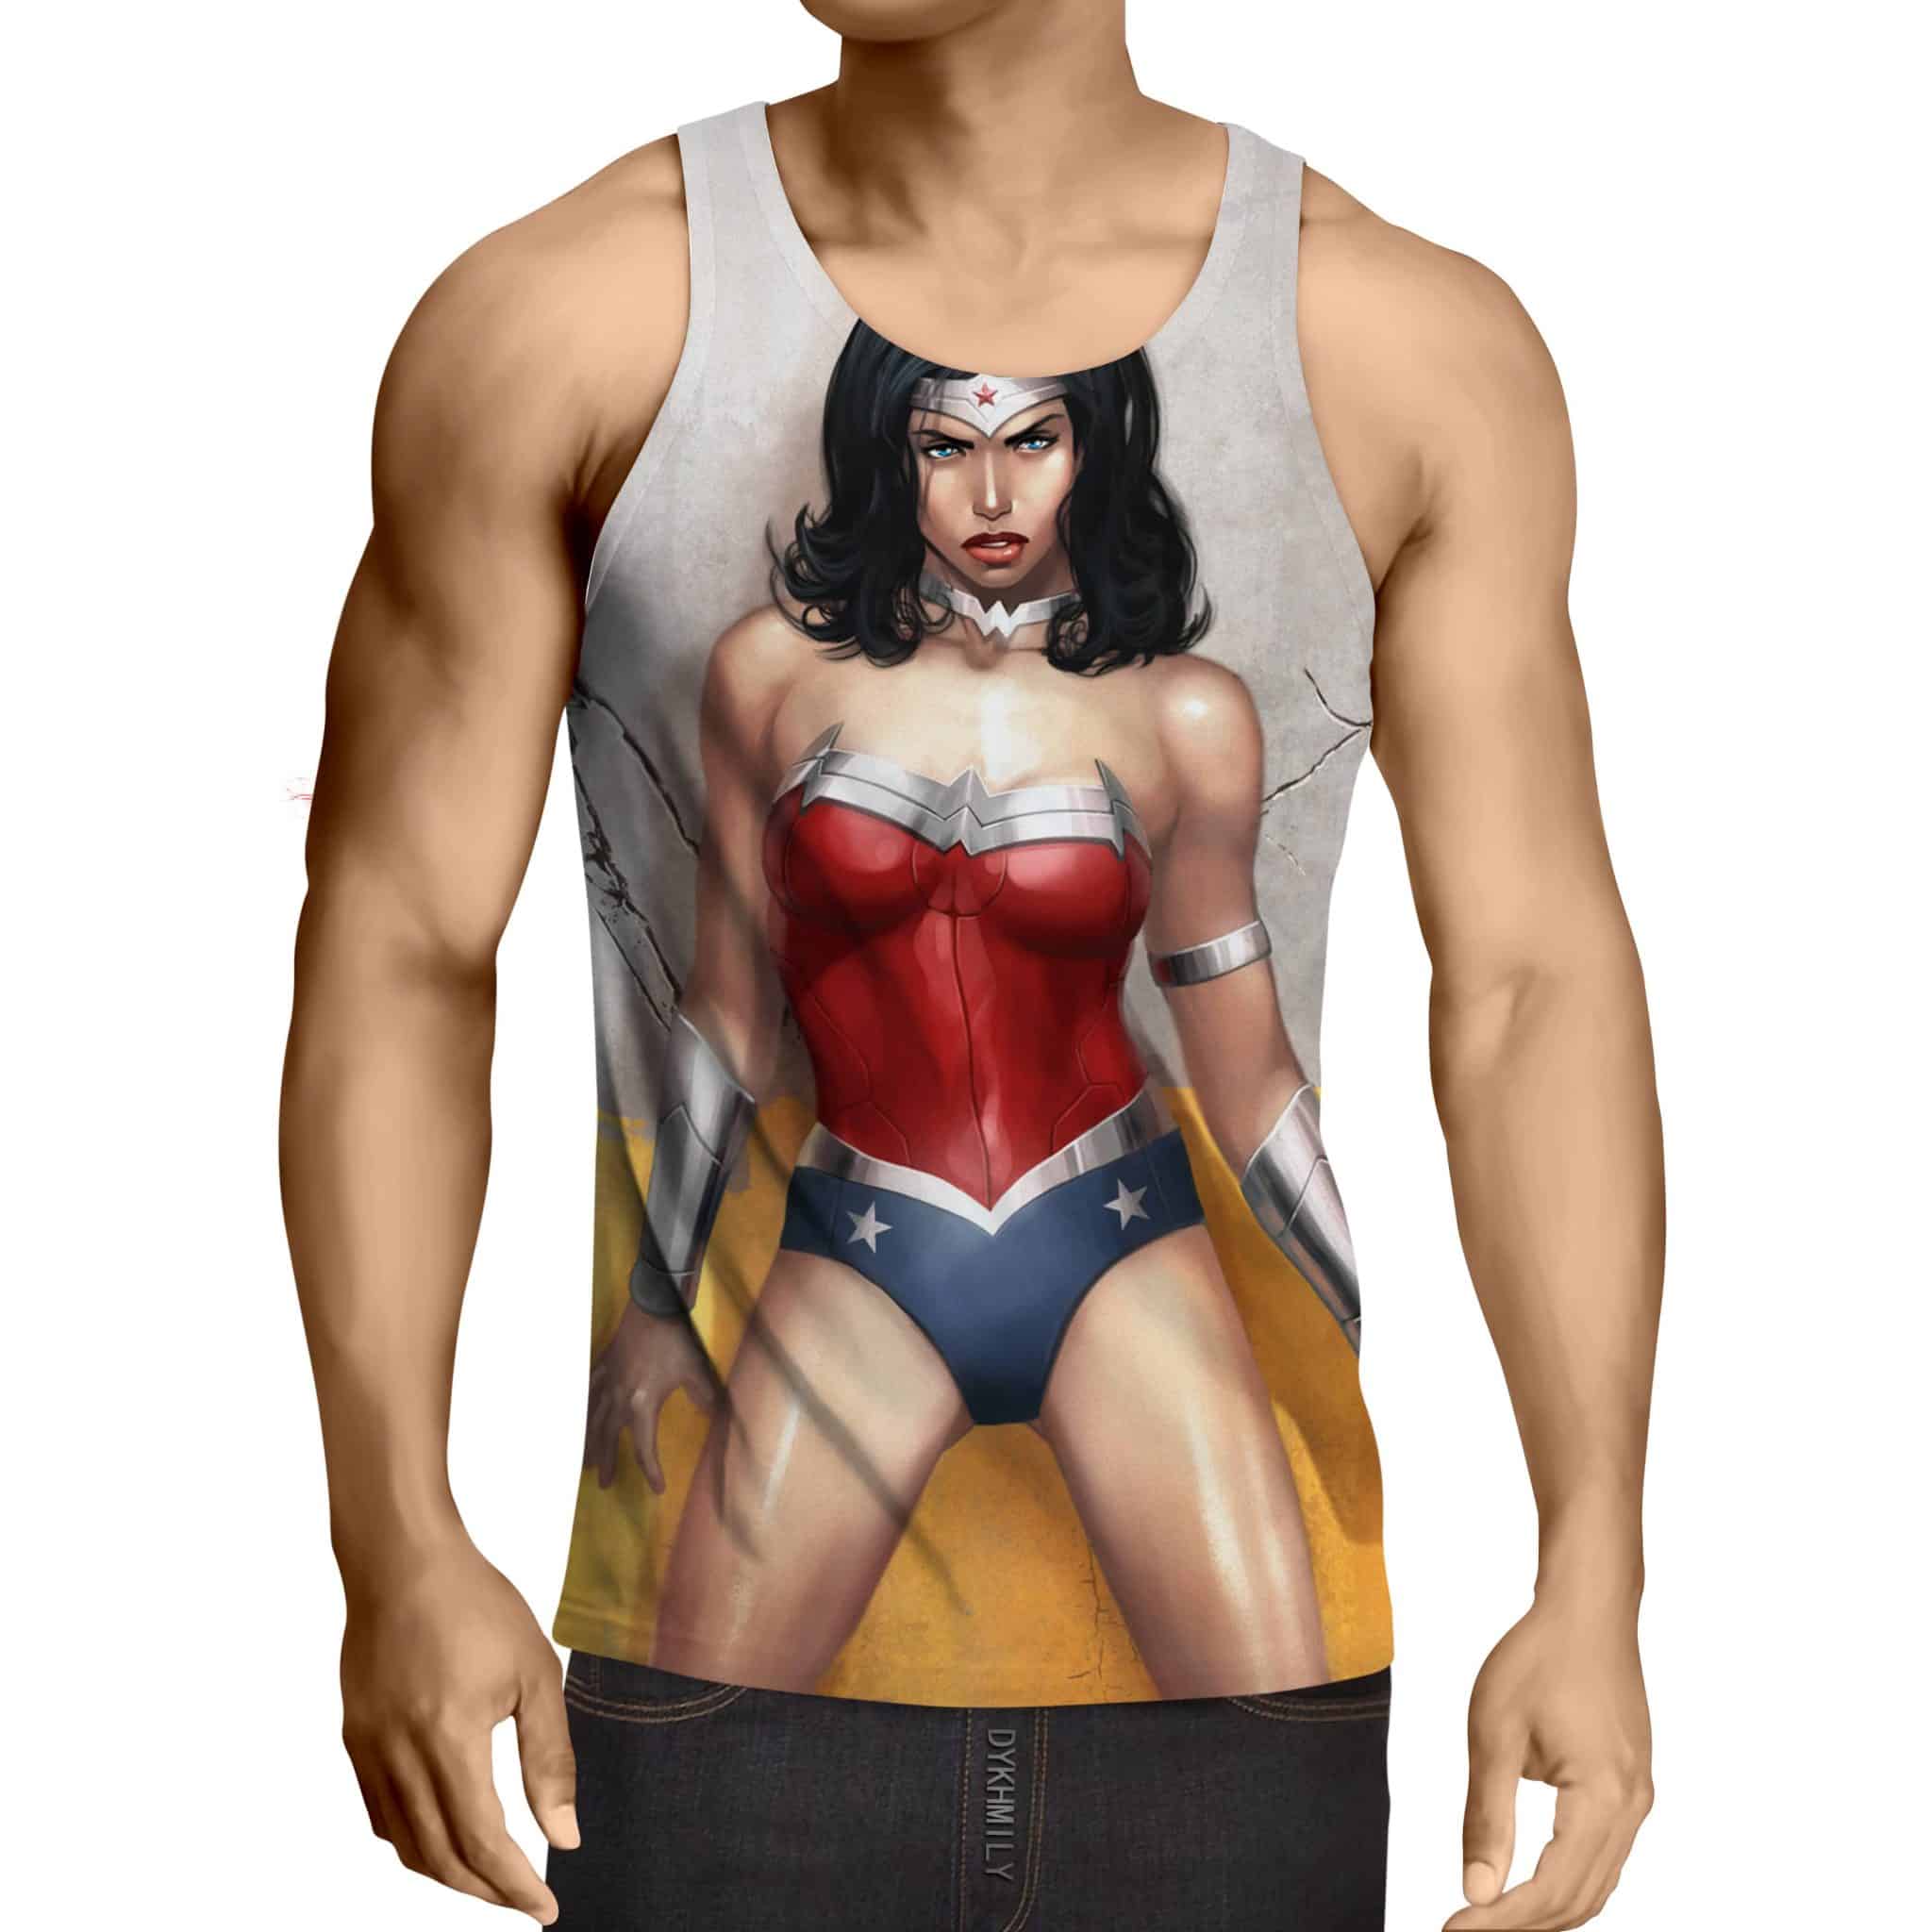 https://superheroesgears.com/wp-content/uploads/2021/06/Sexy_Wonder_Woman_3D_Animated_Print_Cracking_Wall_Tank_Top_1.jpg